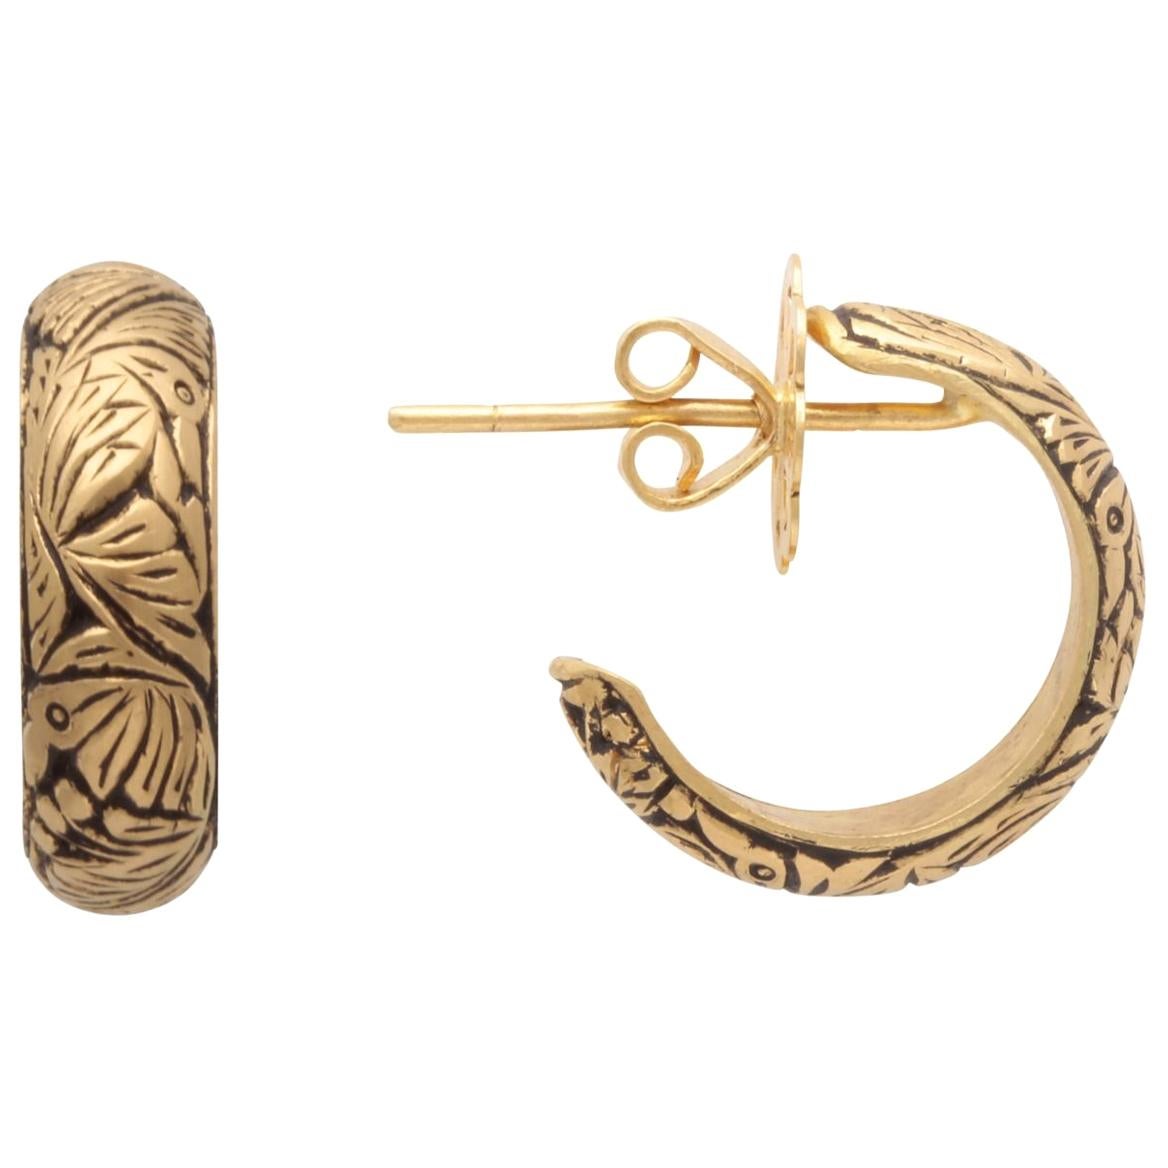 15th Century Technique, 22 Karat Classic Gold Hoop Earrings